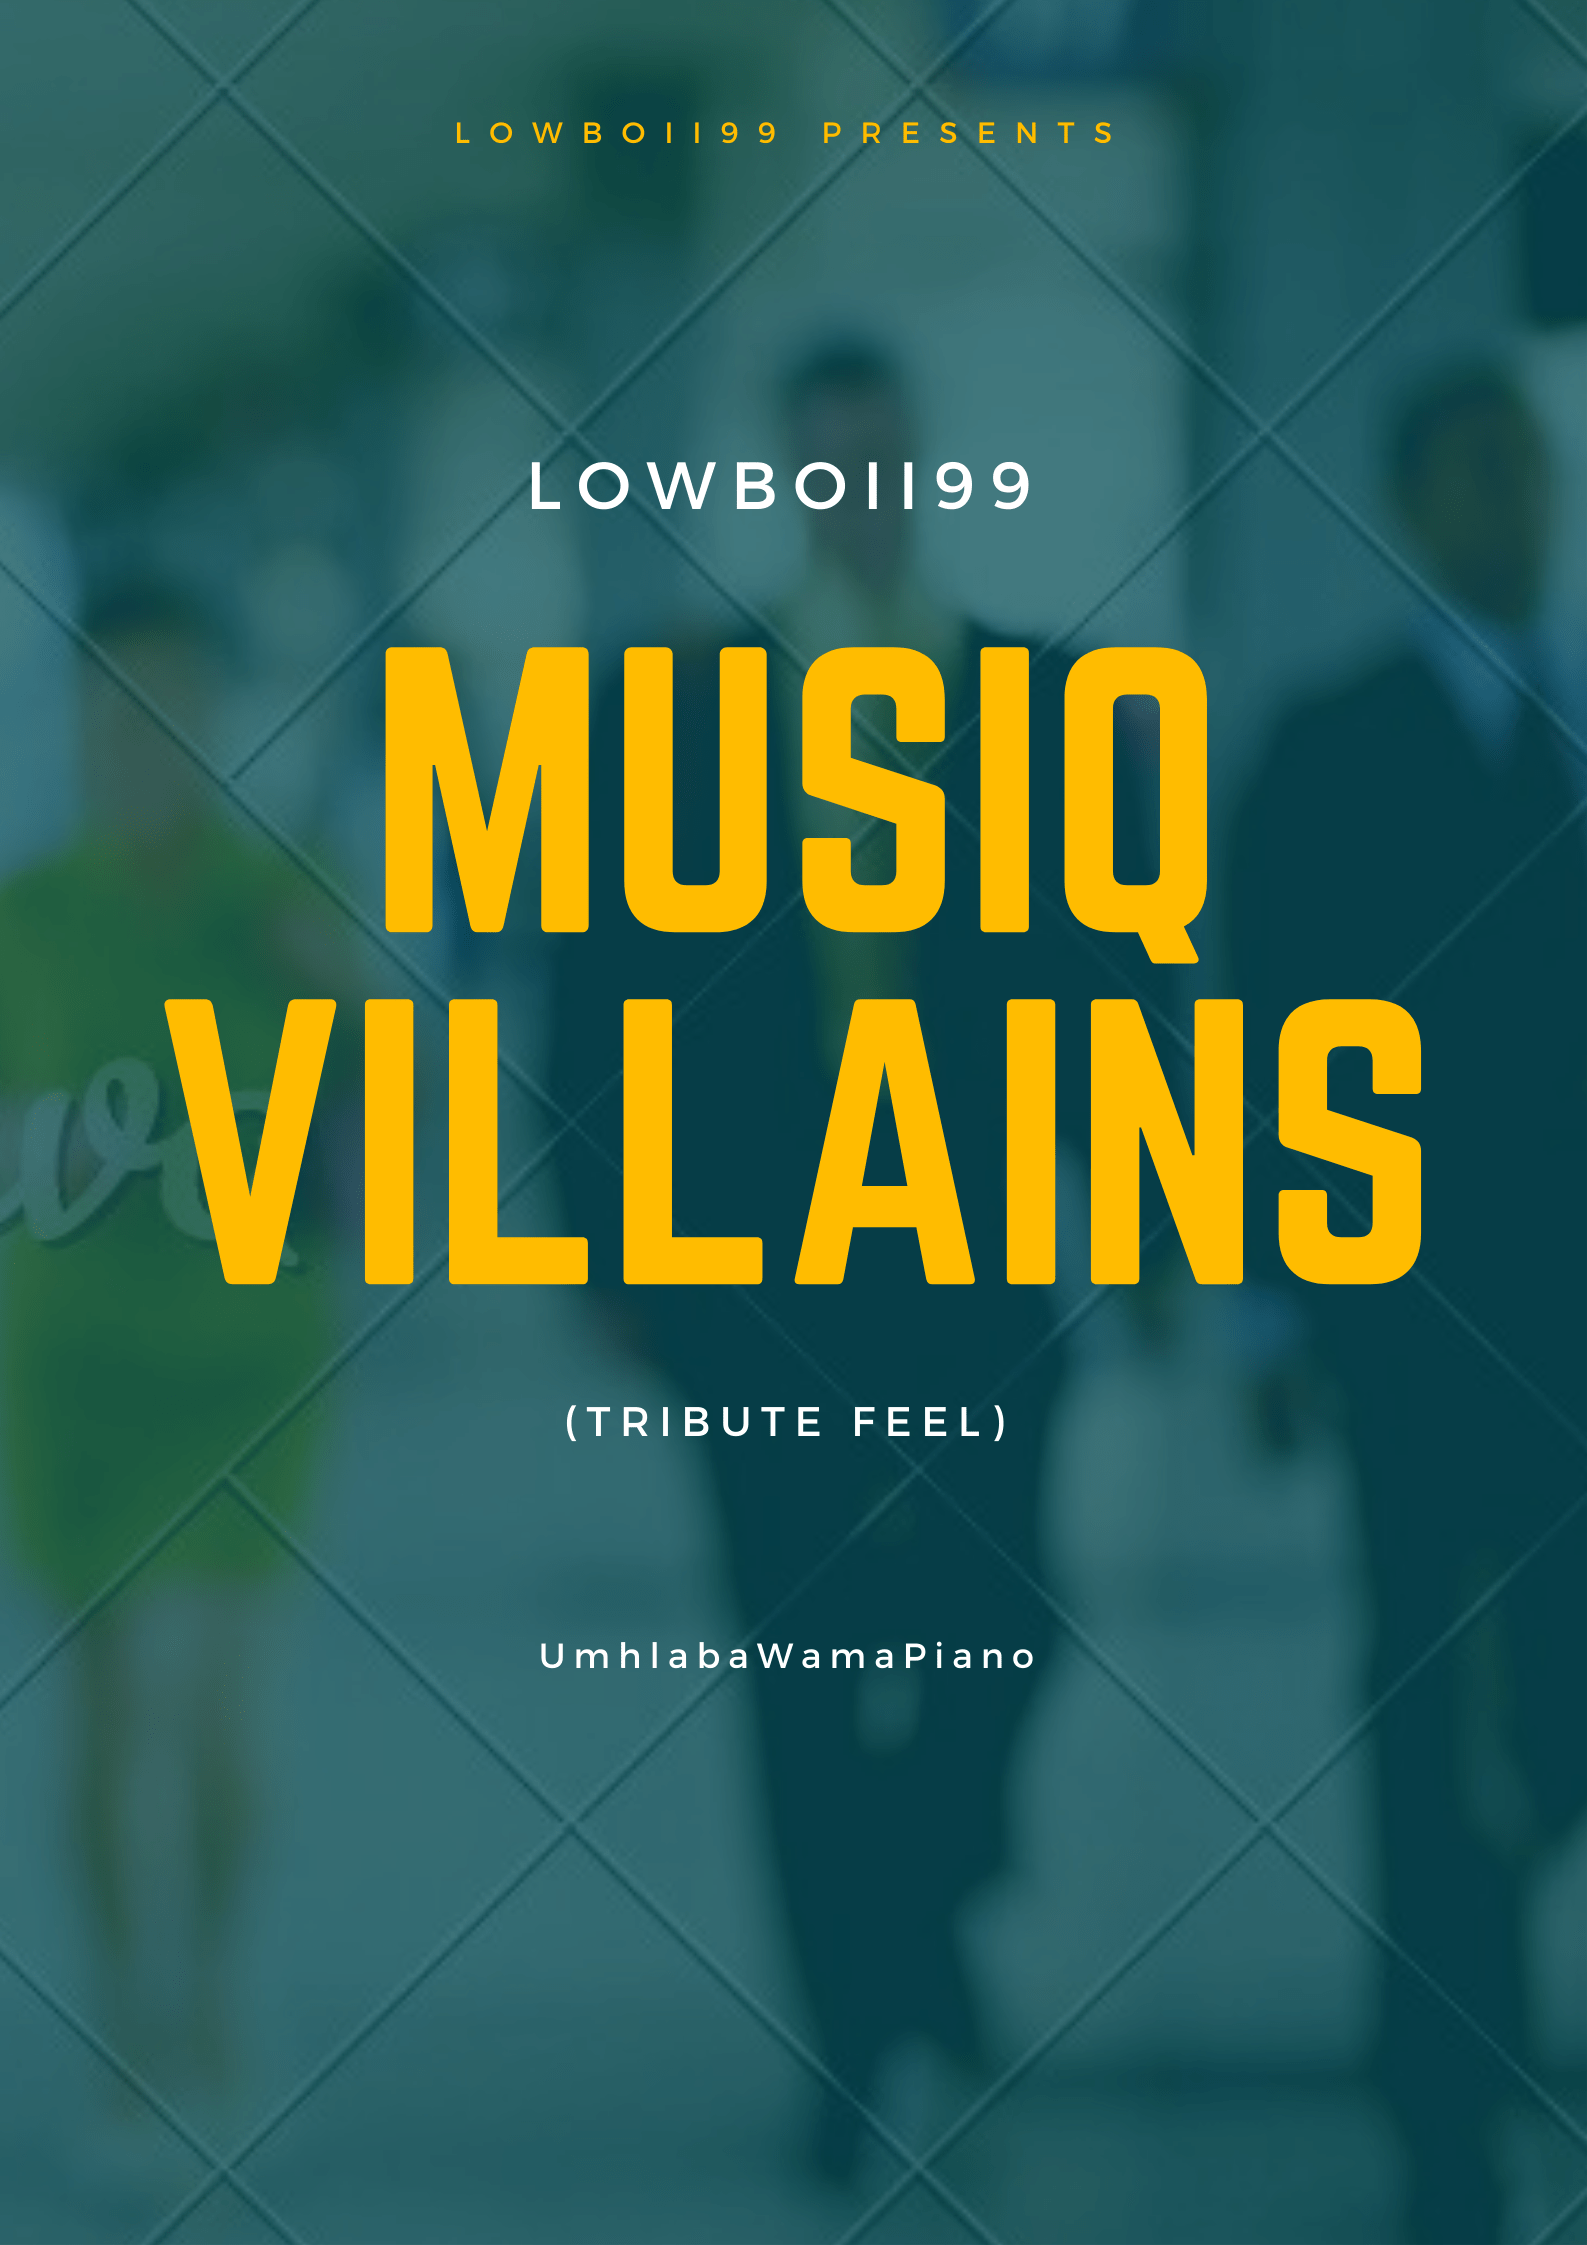 LOWBOII99 MusiQ Villains (Tribute feel)